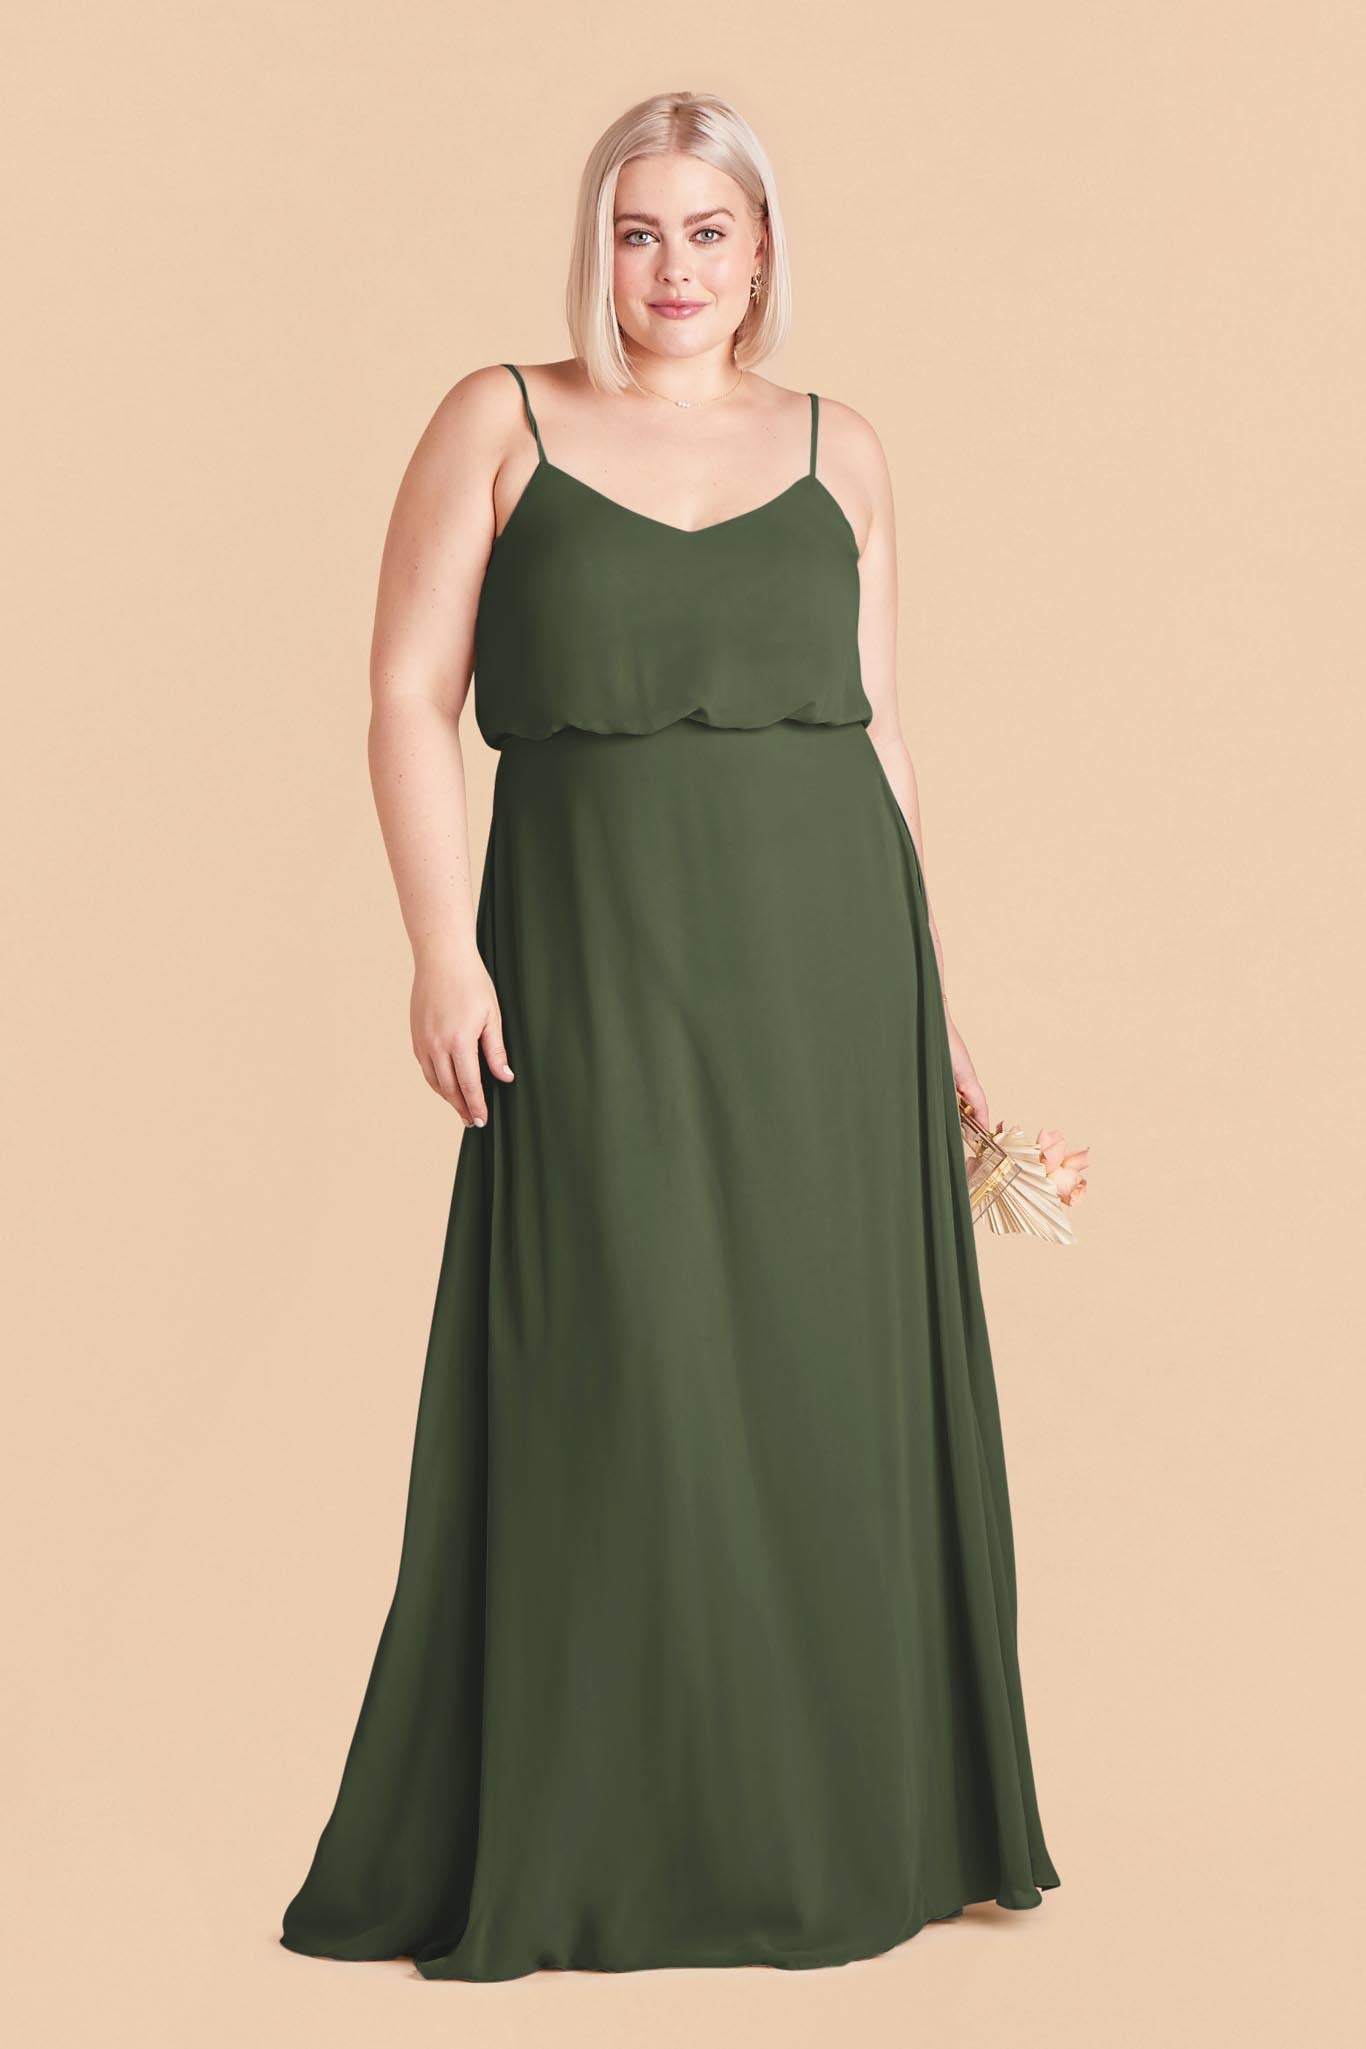 Olive Gwennie Dress by Birdy Grey